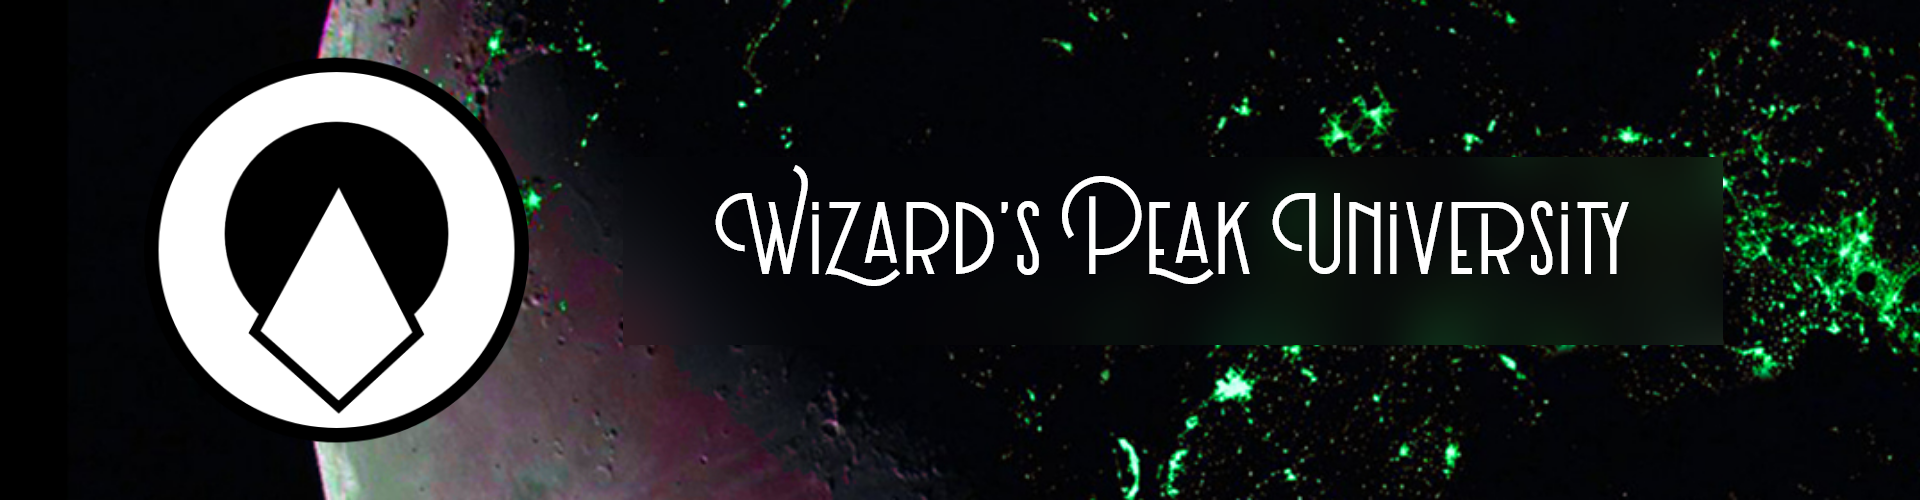 Wizard's Peak University cover